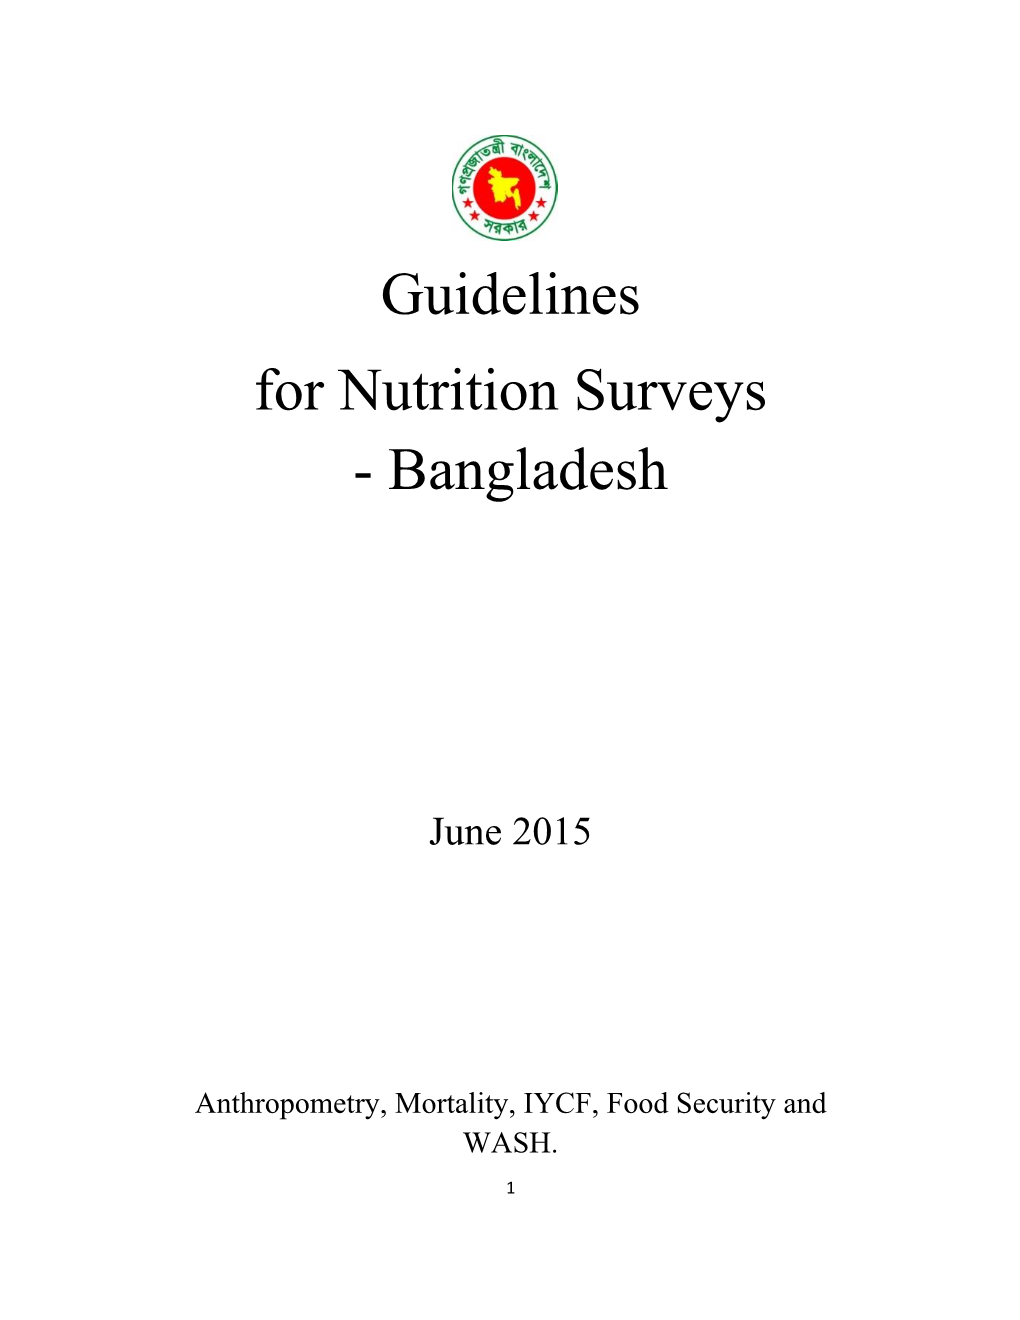 Guidelines for Nutrition Surveys - Bangladesh